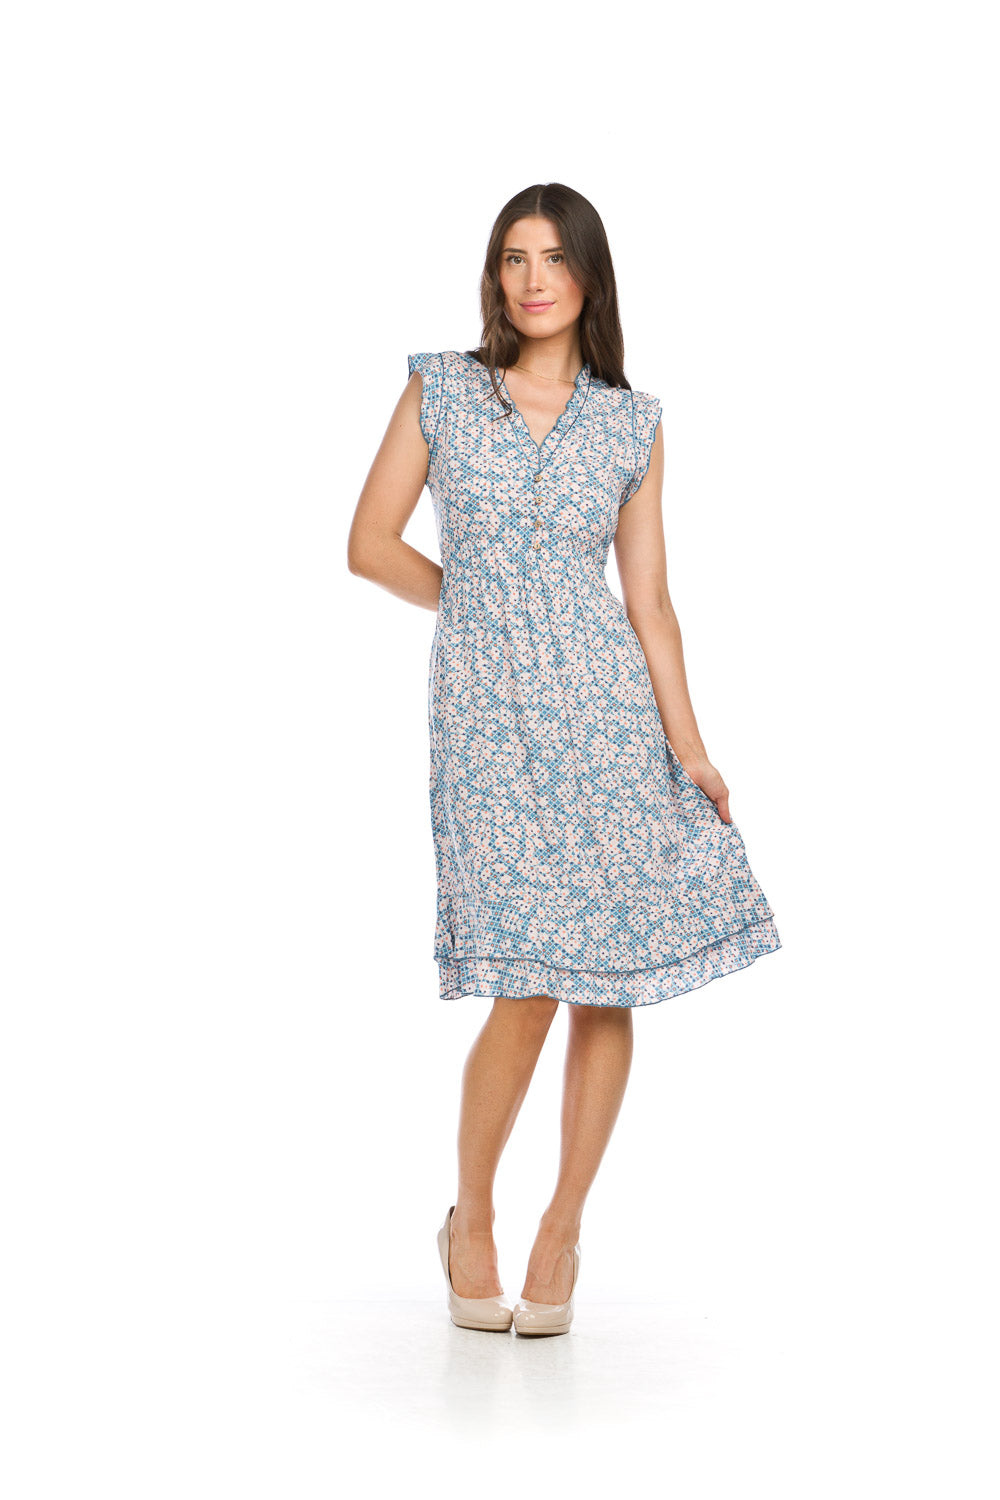 PD16585 BLUE Ditsy Ruffle Trim Dress w Elastic Waist & Tie Belt